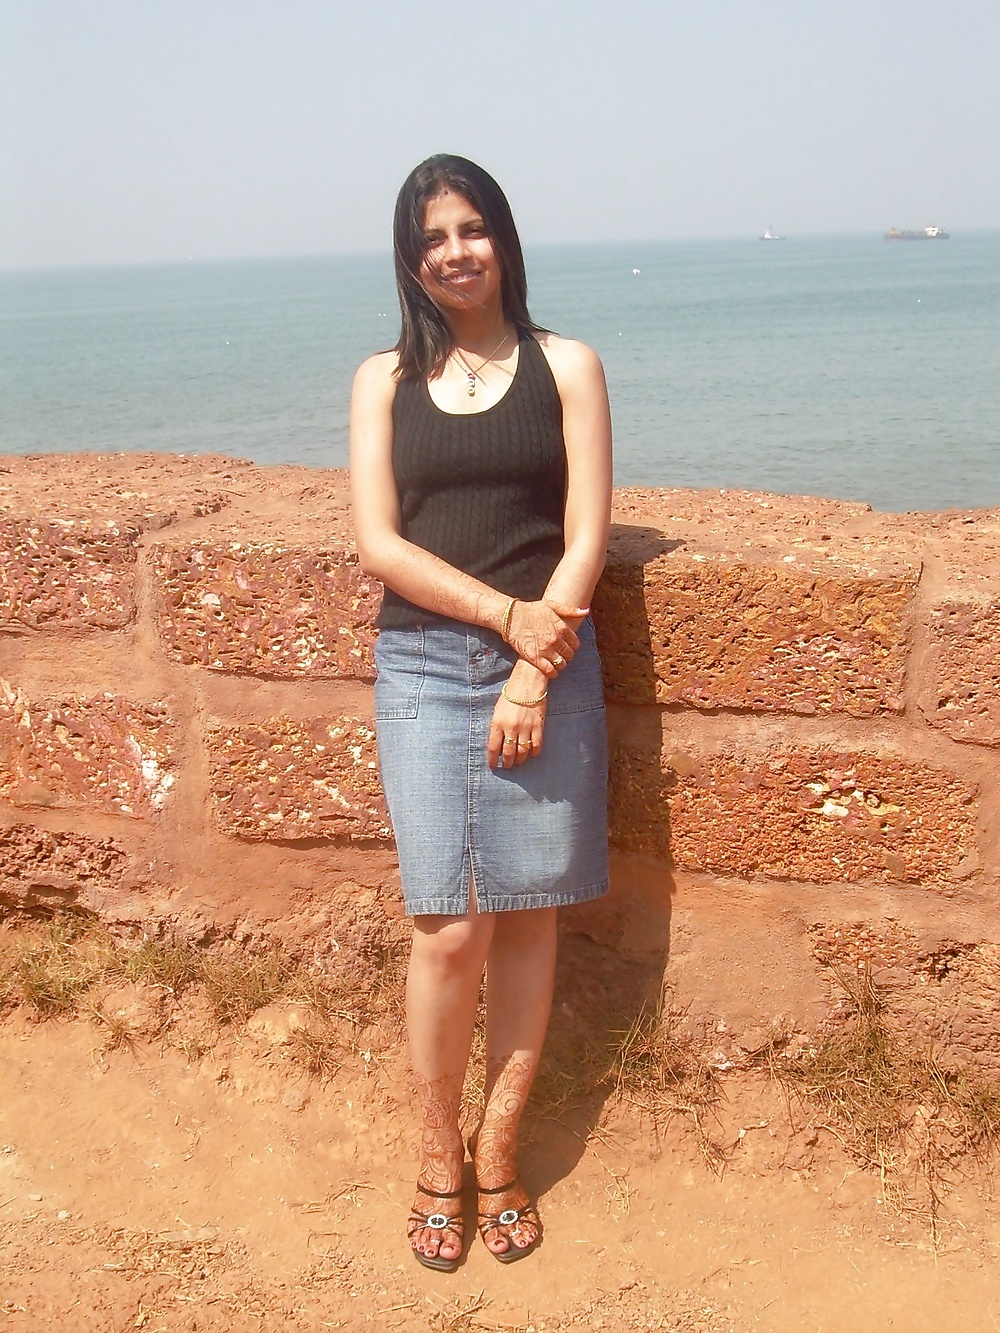 Goa vacanza hot pics di ragazze indiane
 #27361012